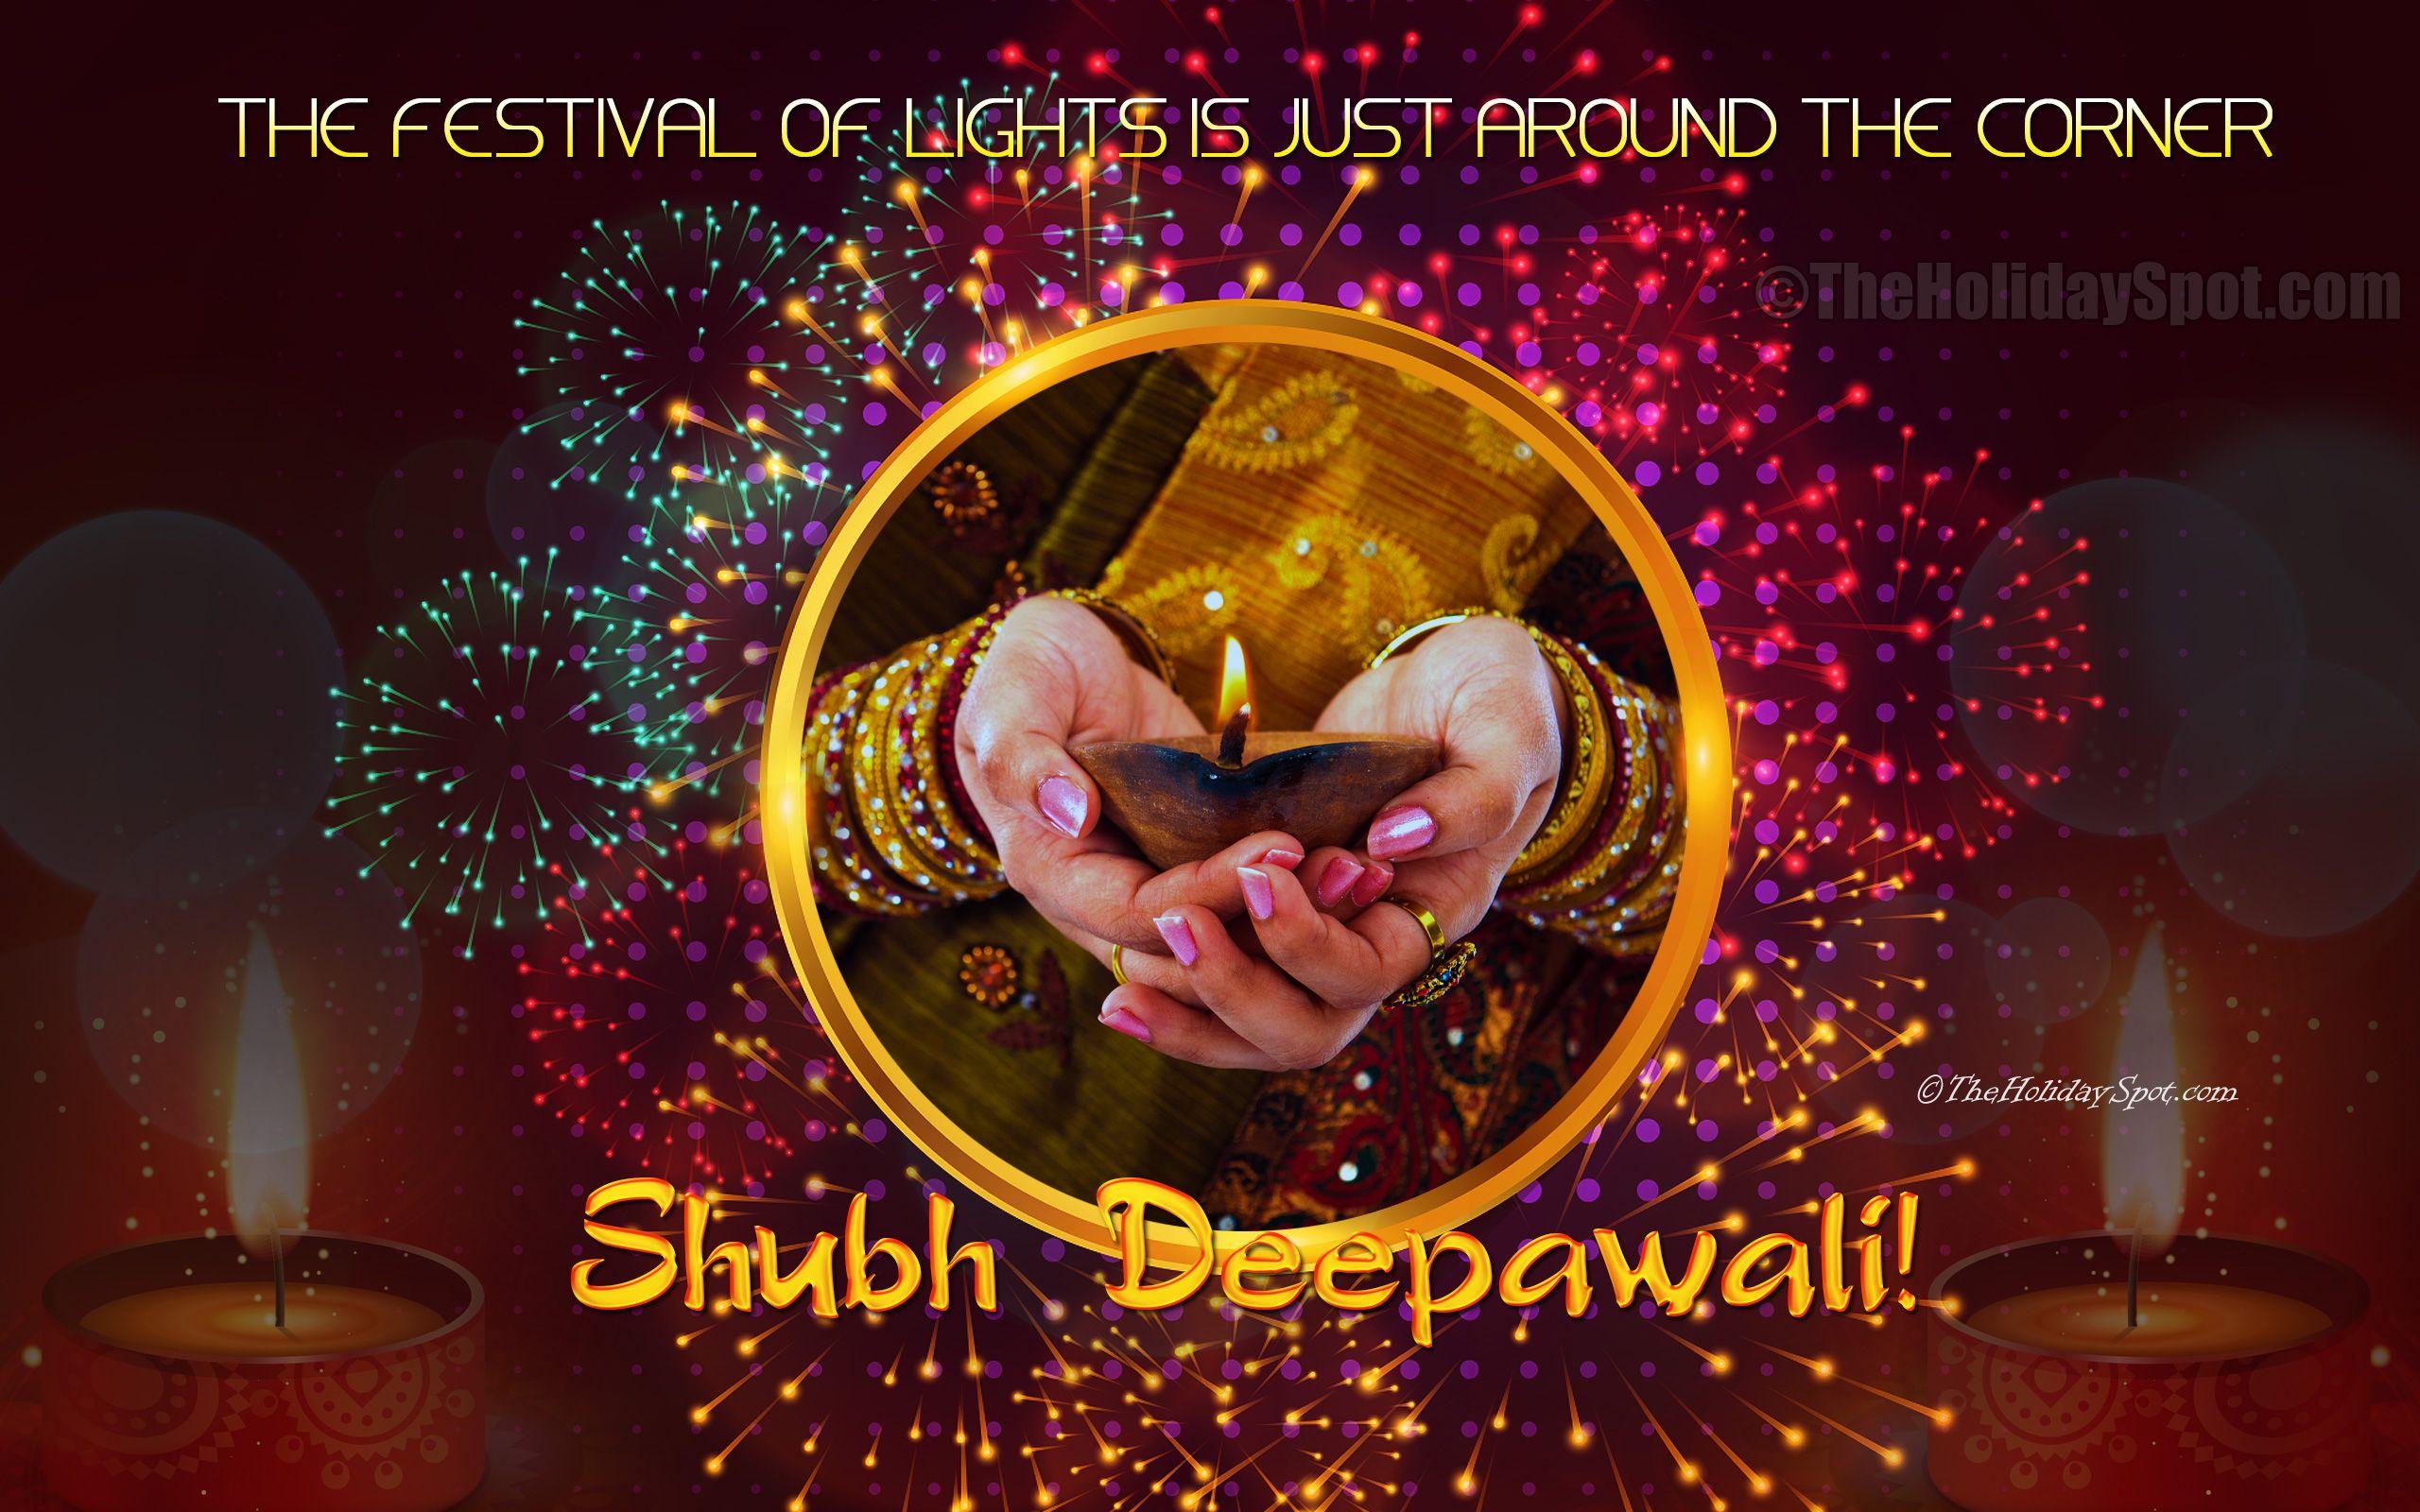 Happy Diwali Wallpaper and Background. Happy Diwali HD